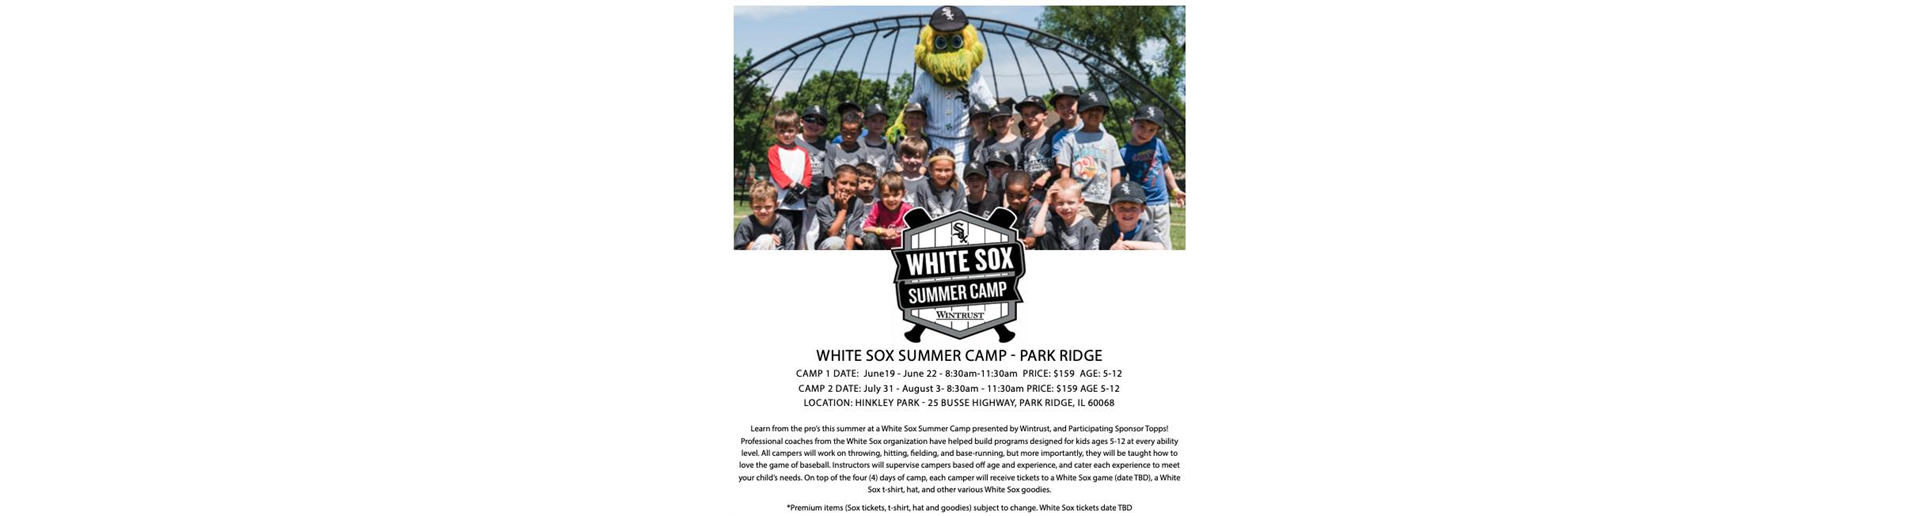 White Sox Camp in Park Ridge!